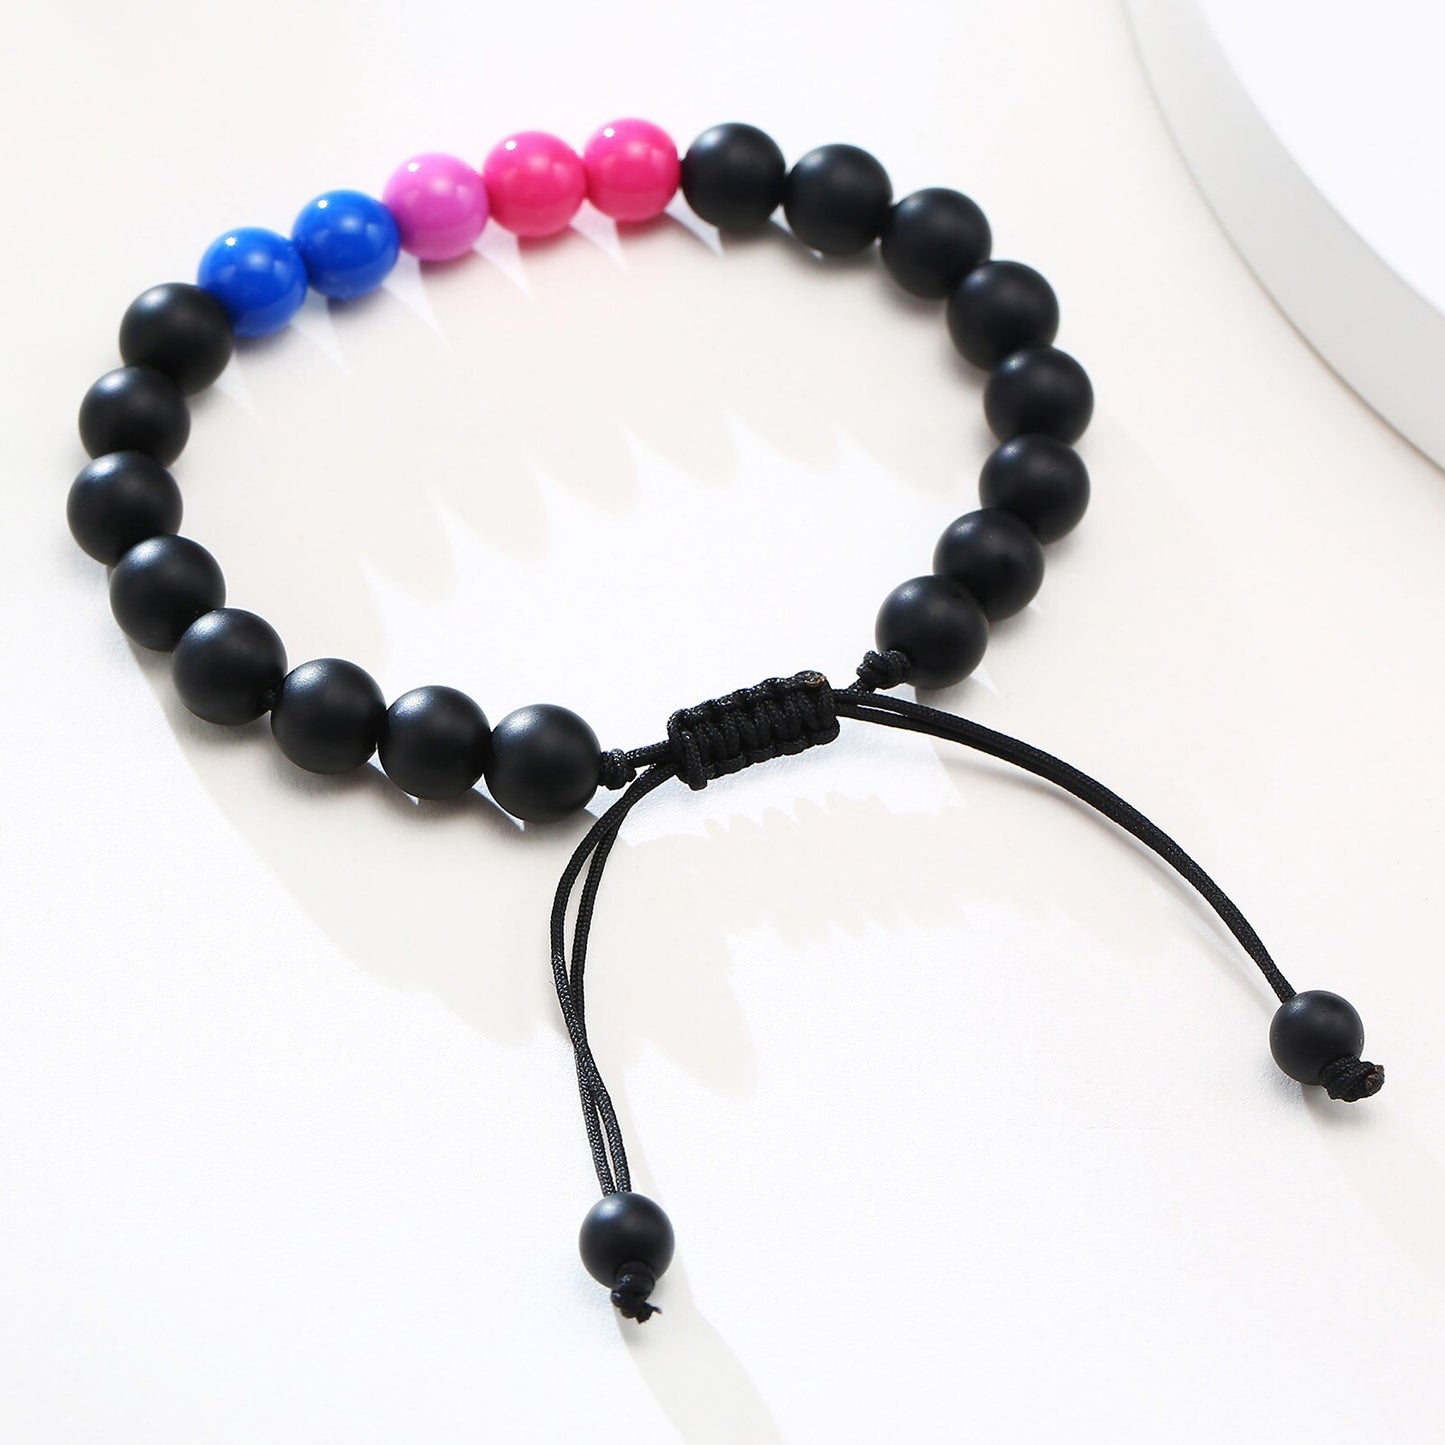 LGBTQ+ Pride Rainbow Beads Charm Bracelets Adjustable 8mm